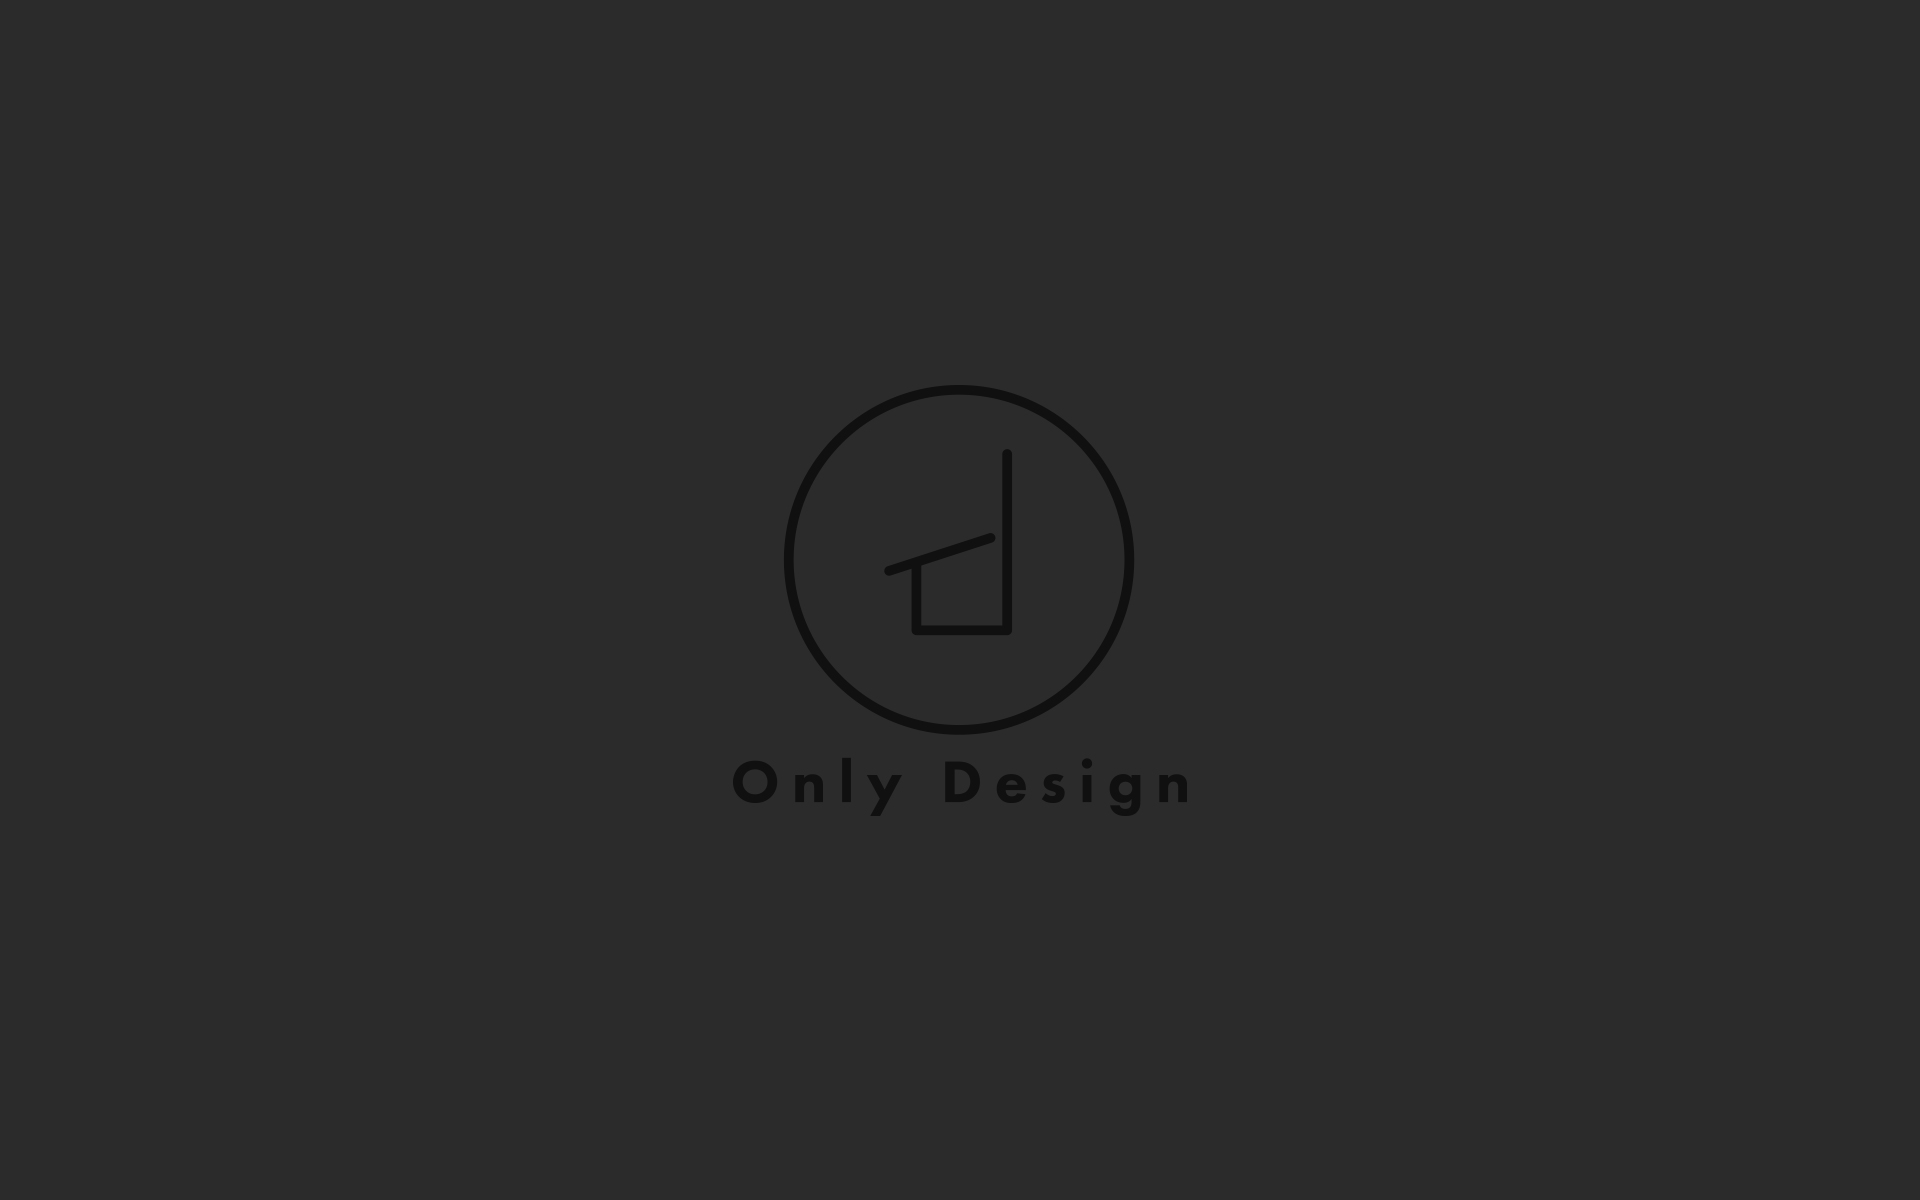 Zeroartdesign-Logo-Only-Design